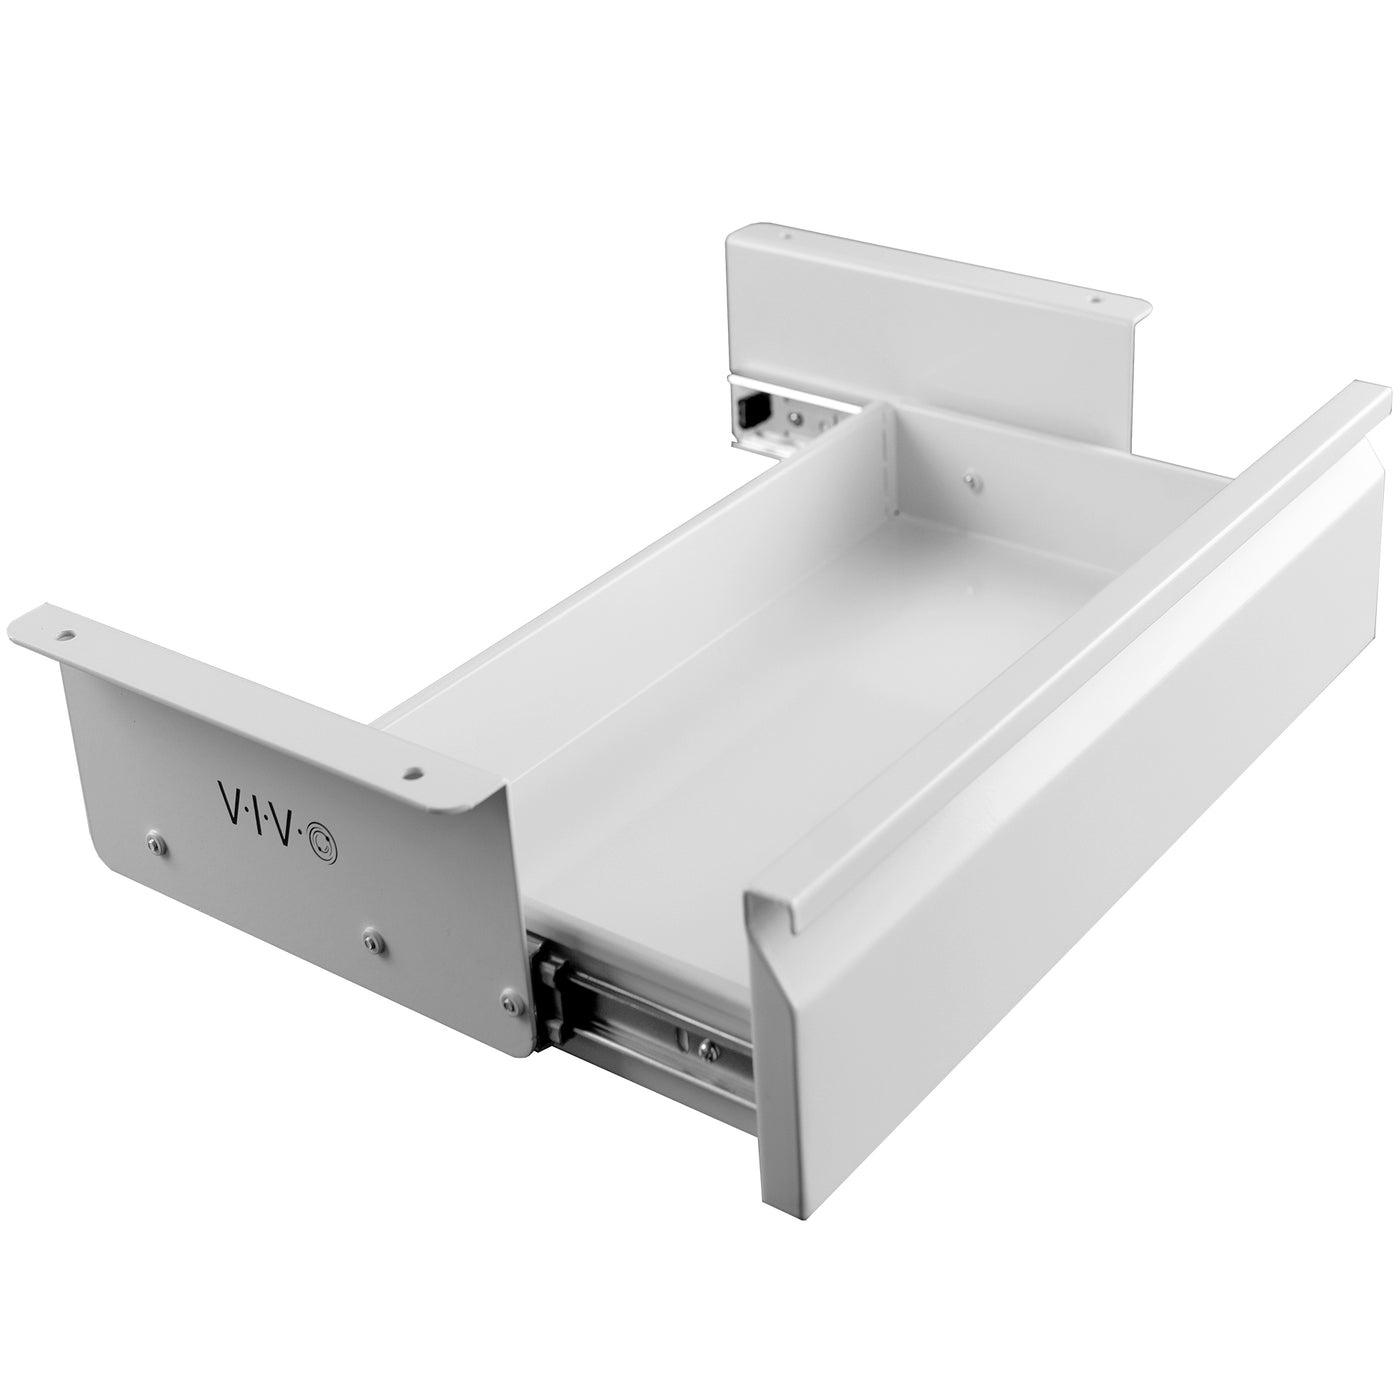 Durable versatile pullout under desk organizer drawer for extra storage with quiet sliding mechanism.